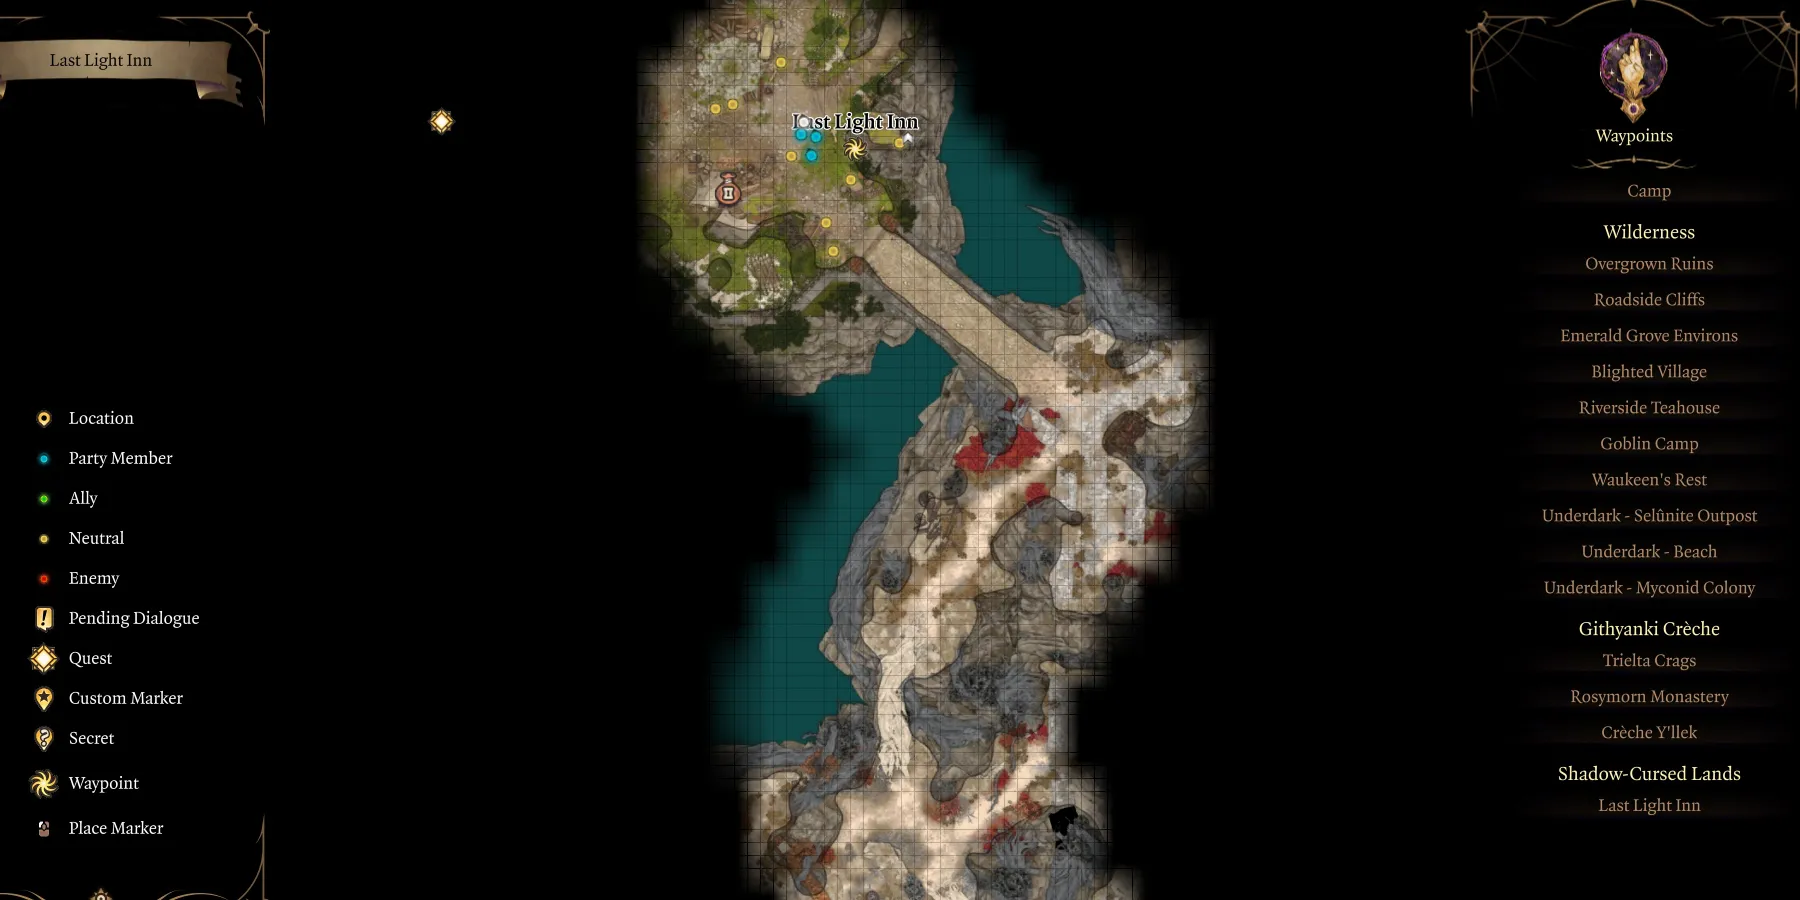 Last Light Inn path map screenshot